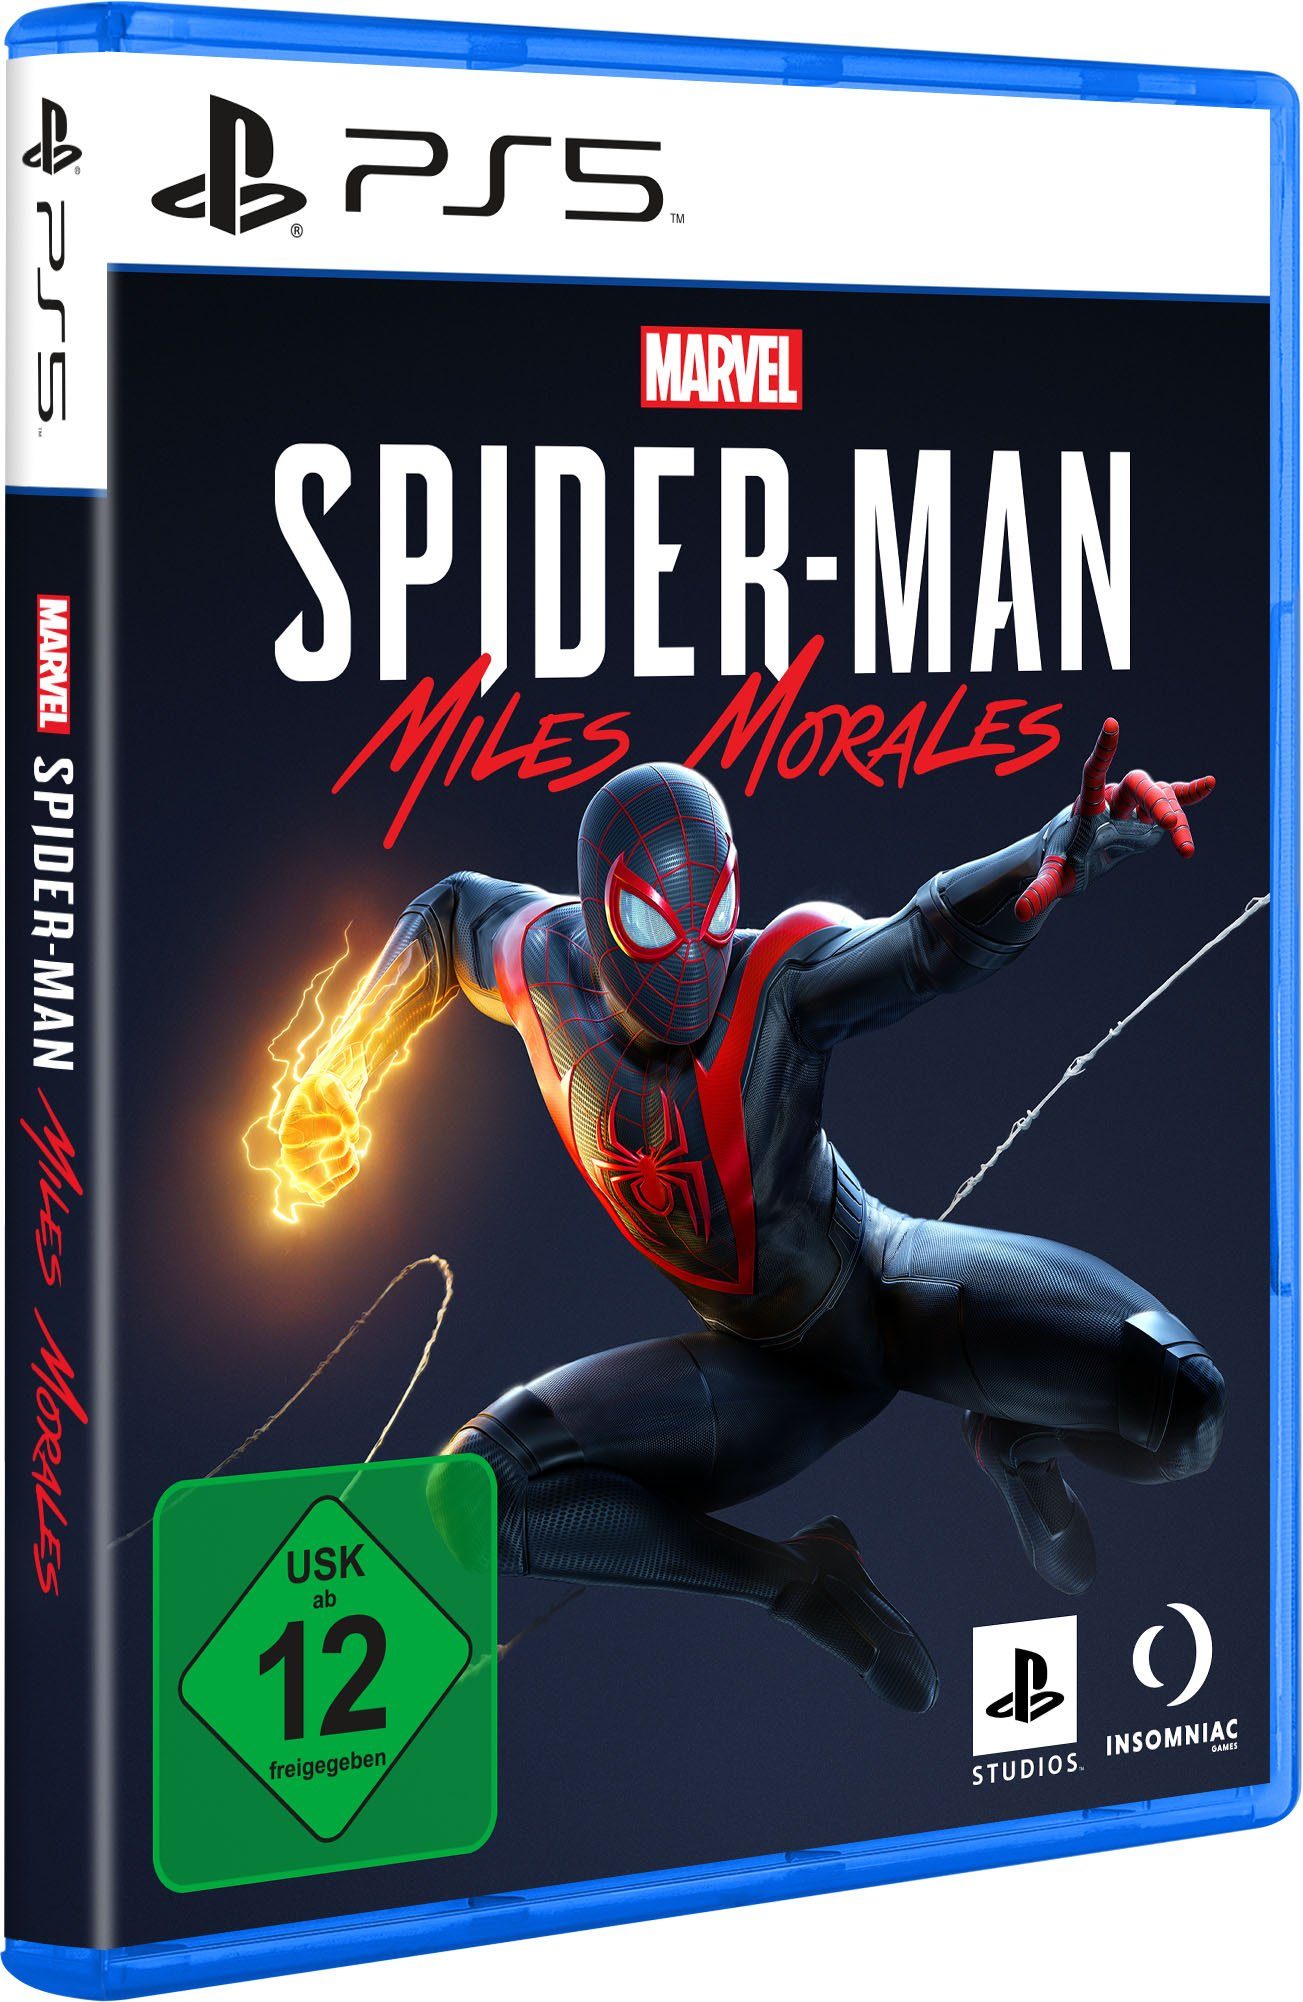 Marvel's Spider-Man: Morales PlayStation 5 Miles